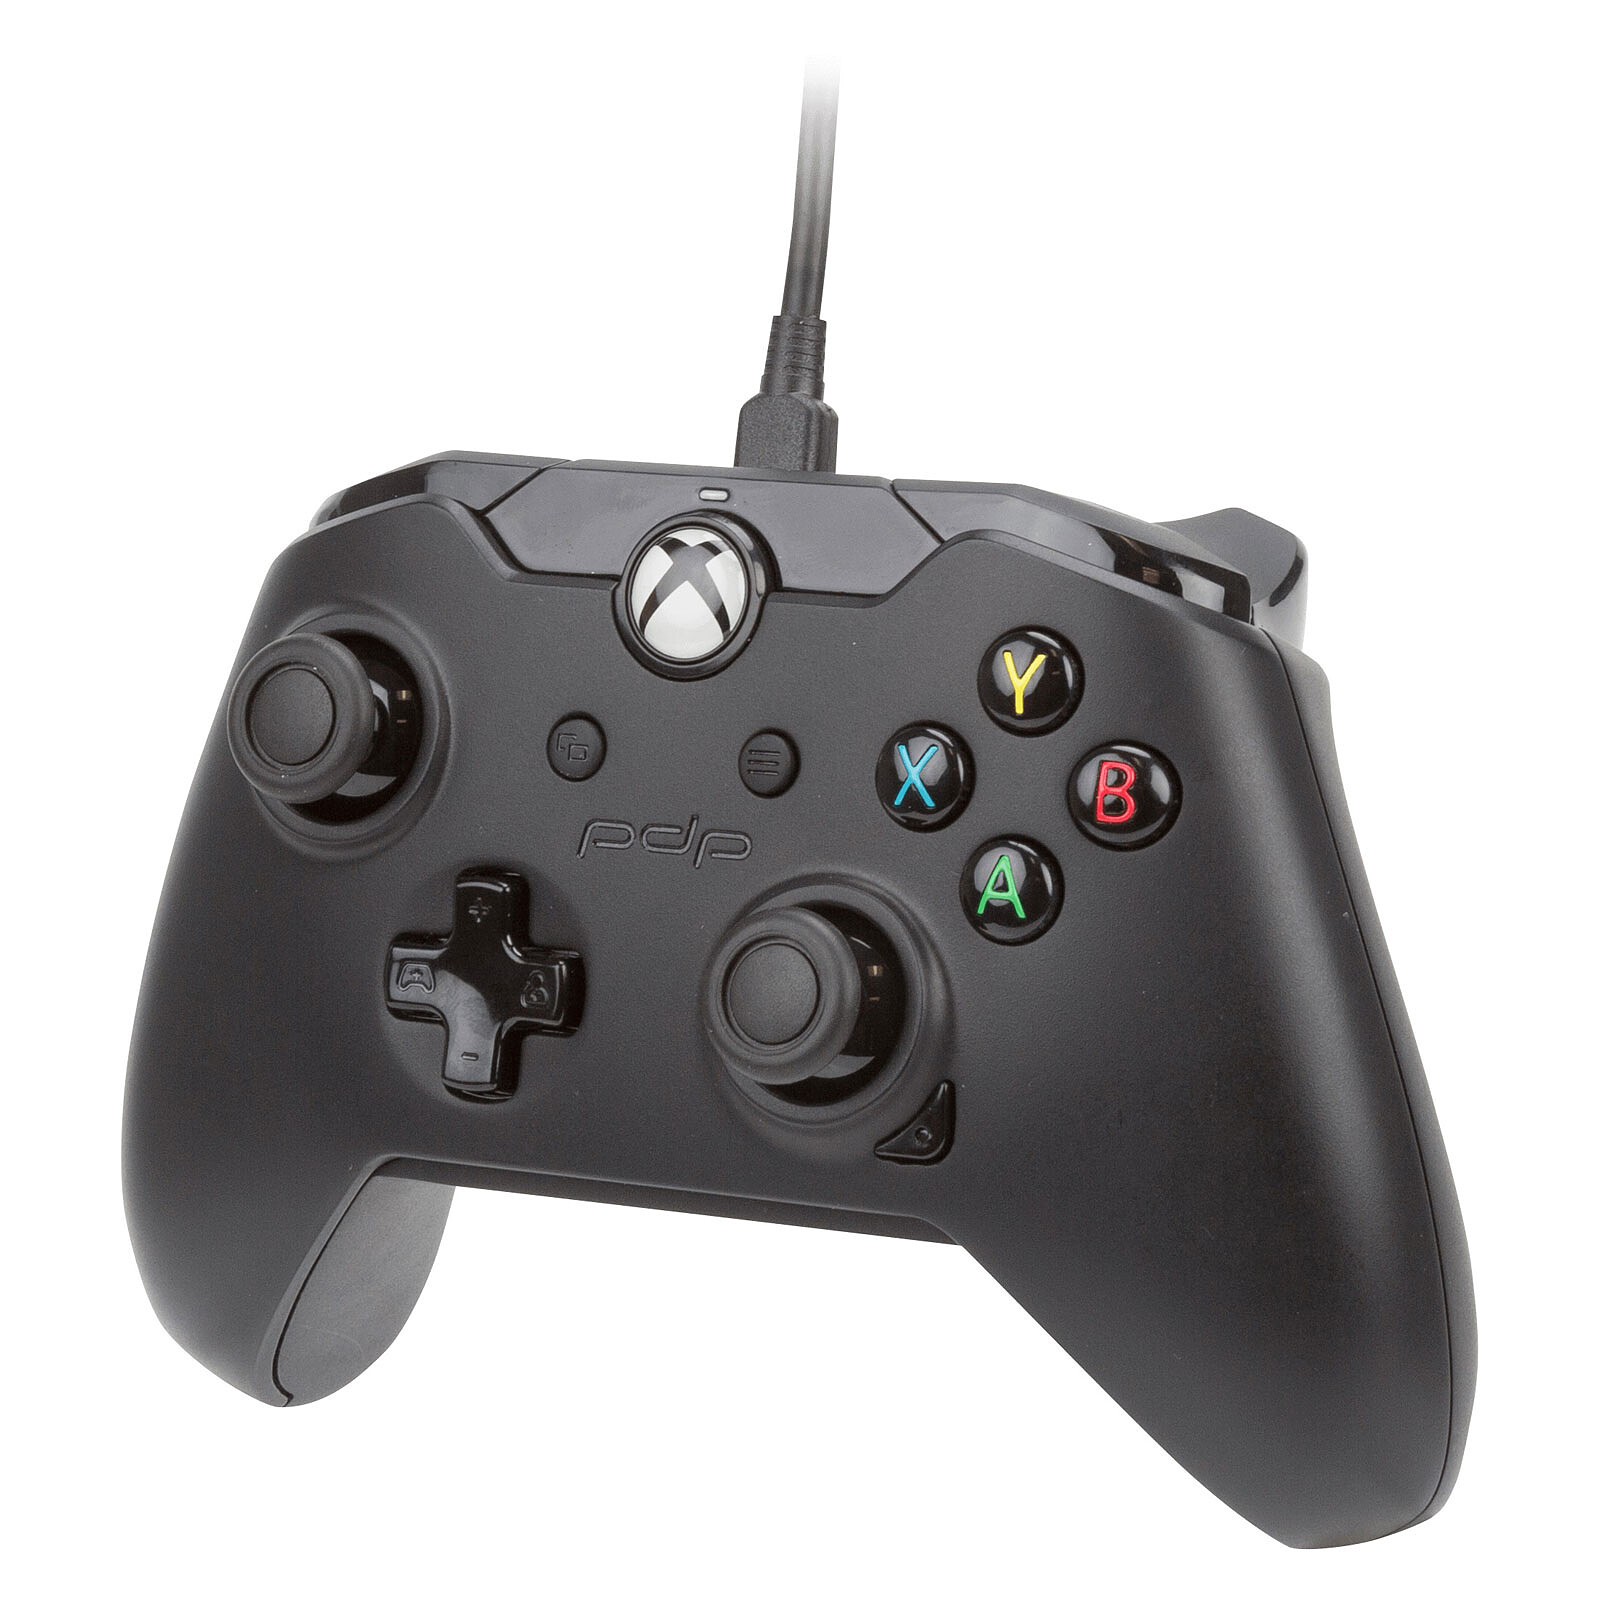 Microsoft Xbox Elite Series 2 Core (Rouge) - Manette PC - Garantie 3 ans  LDLC